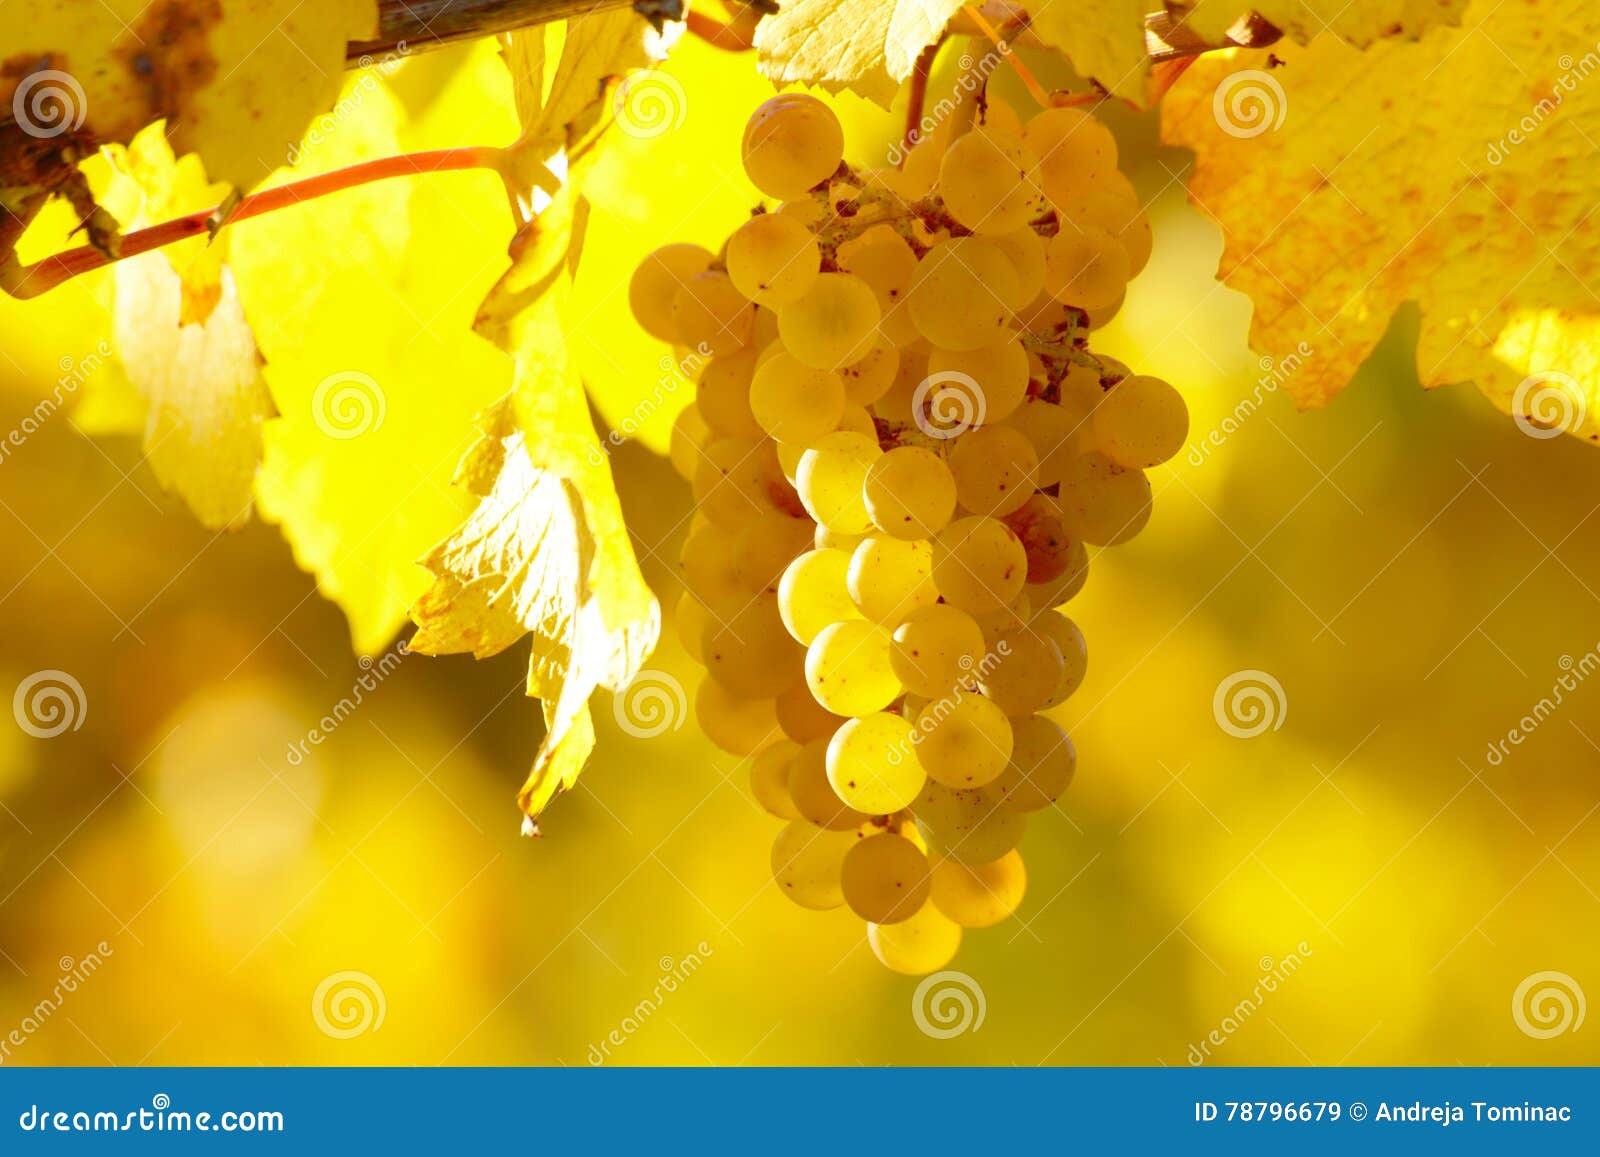 yellow grape in vineyard in autumn